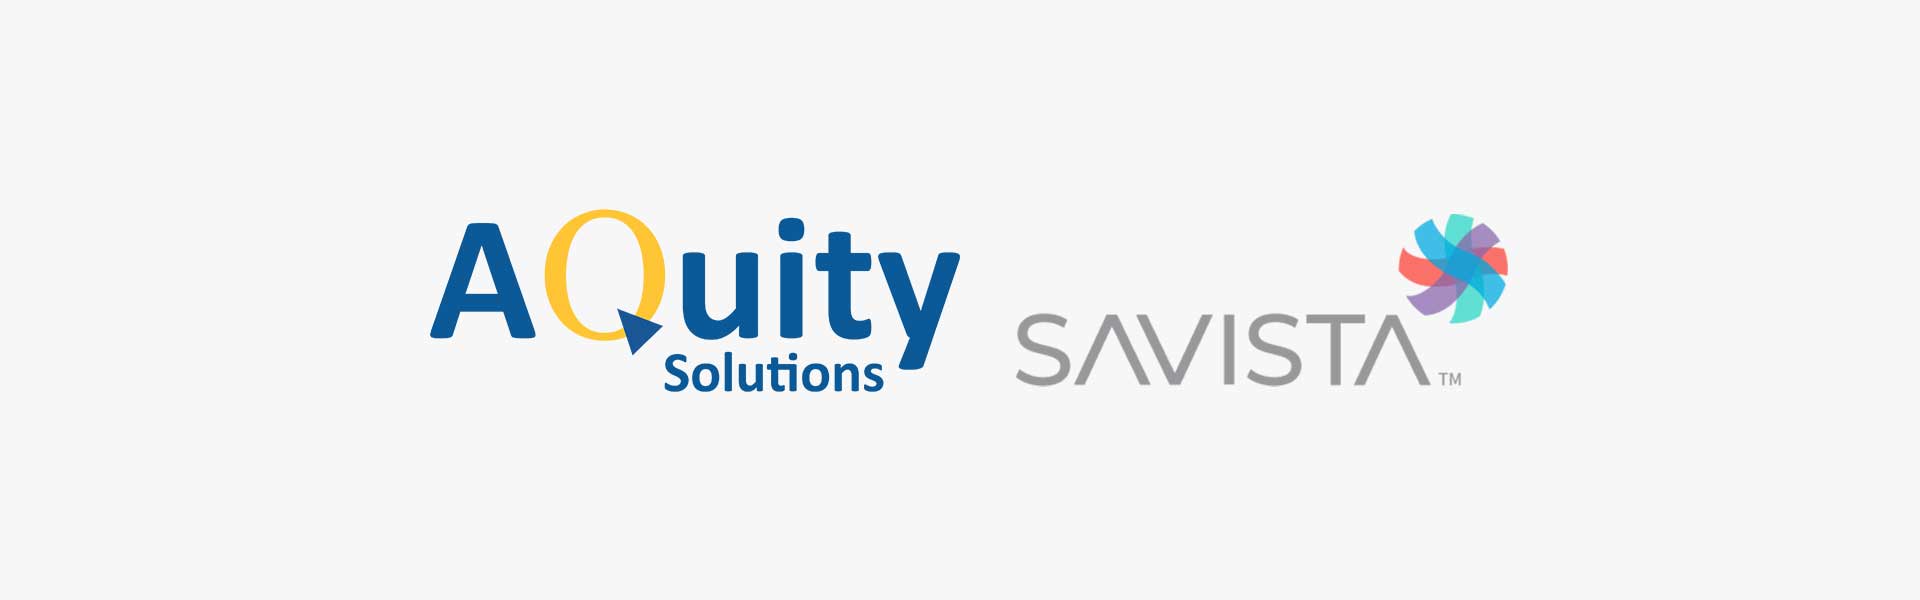 aquity partners with savista